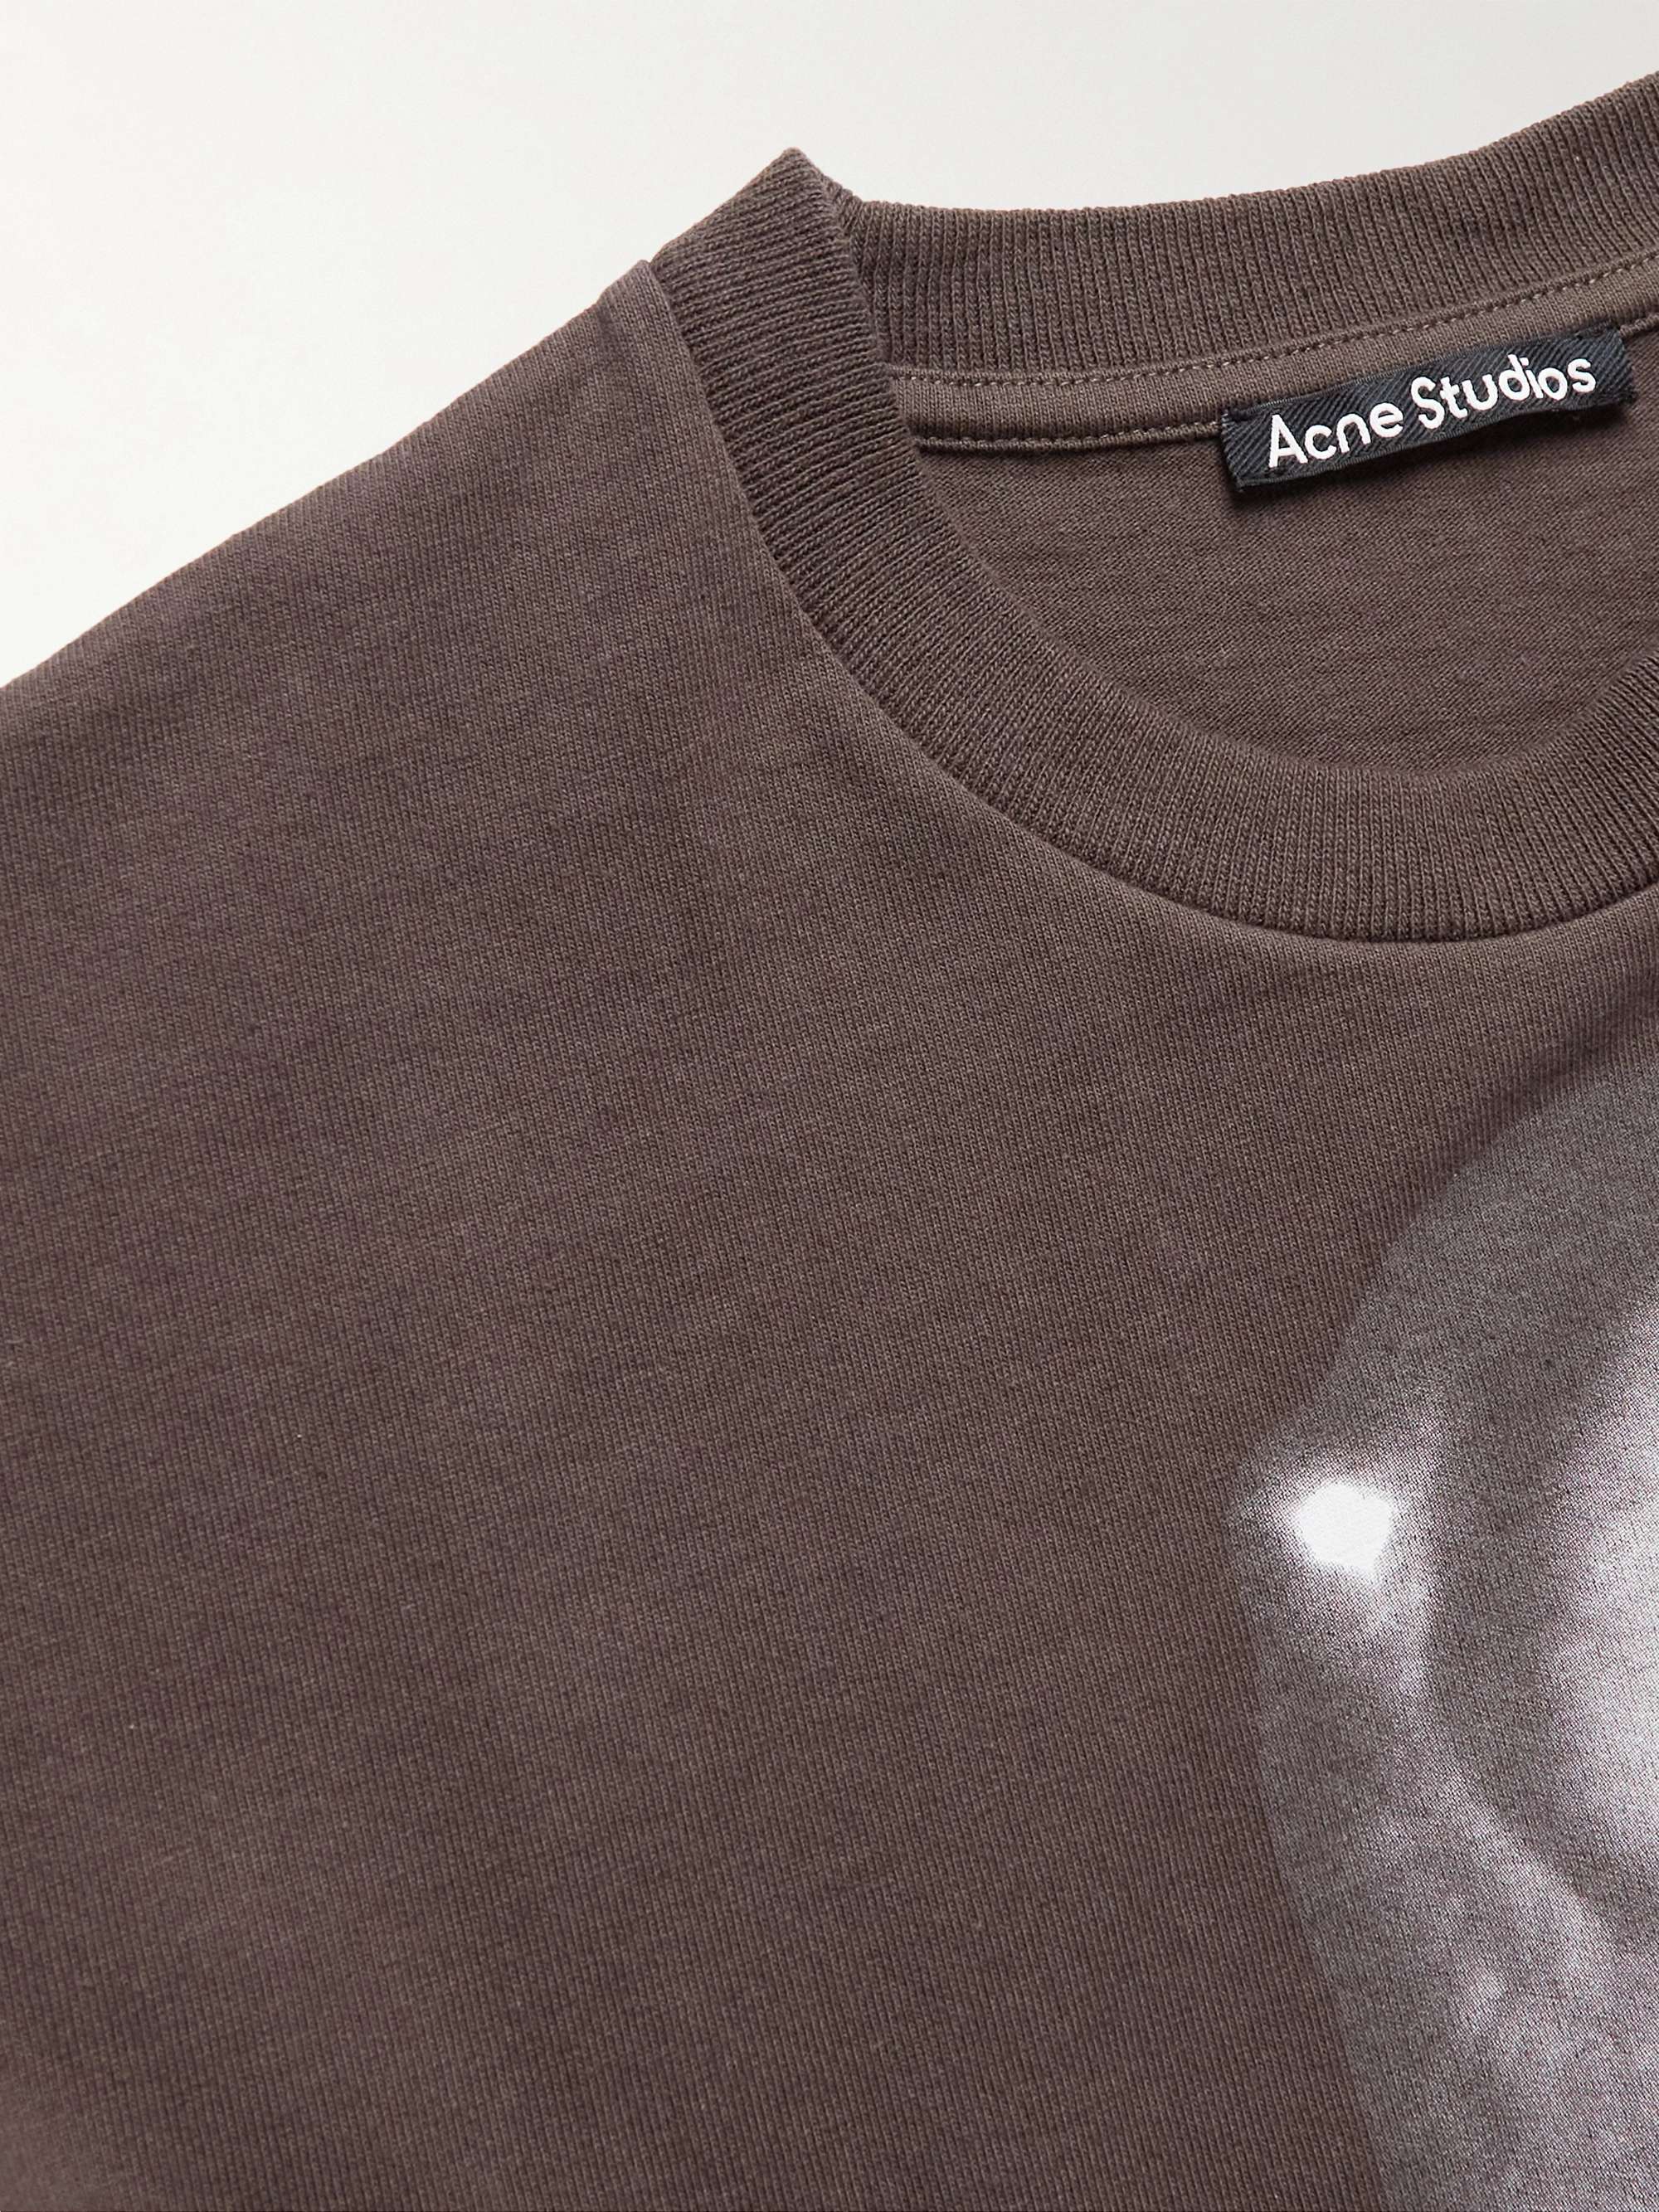 ACNE STUDIOS Printed Cotton-Jersey T-Shirt